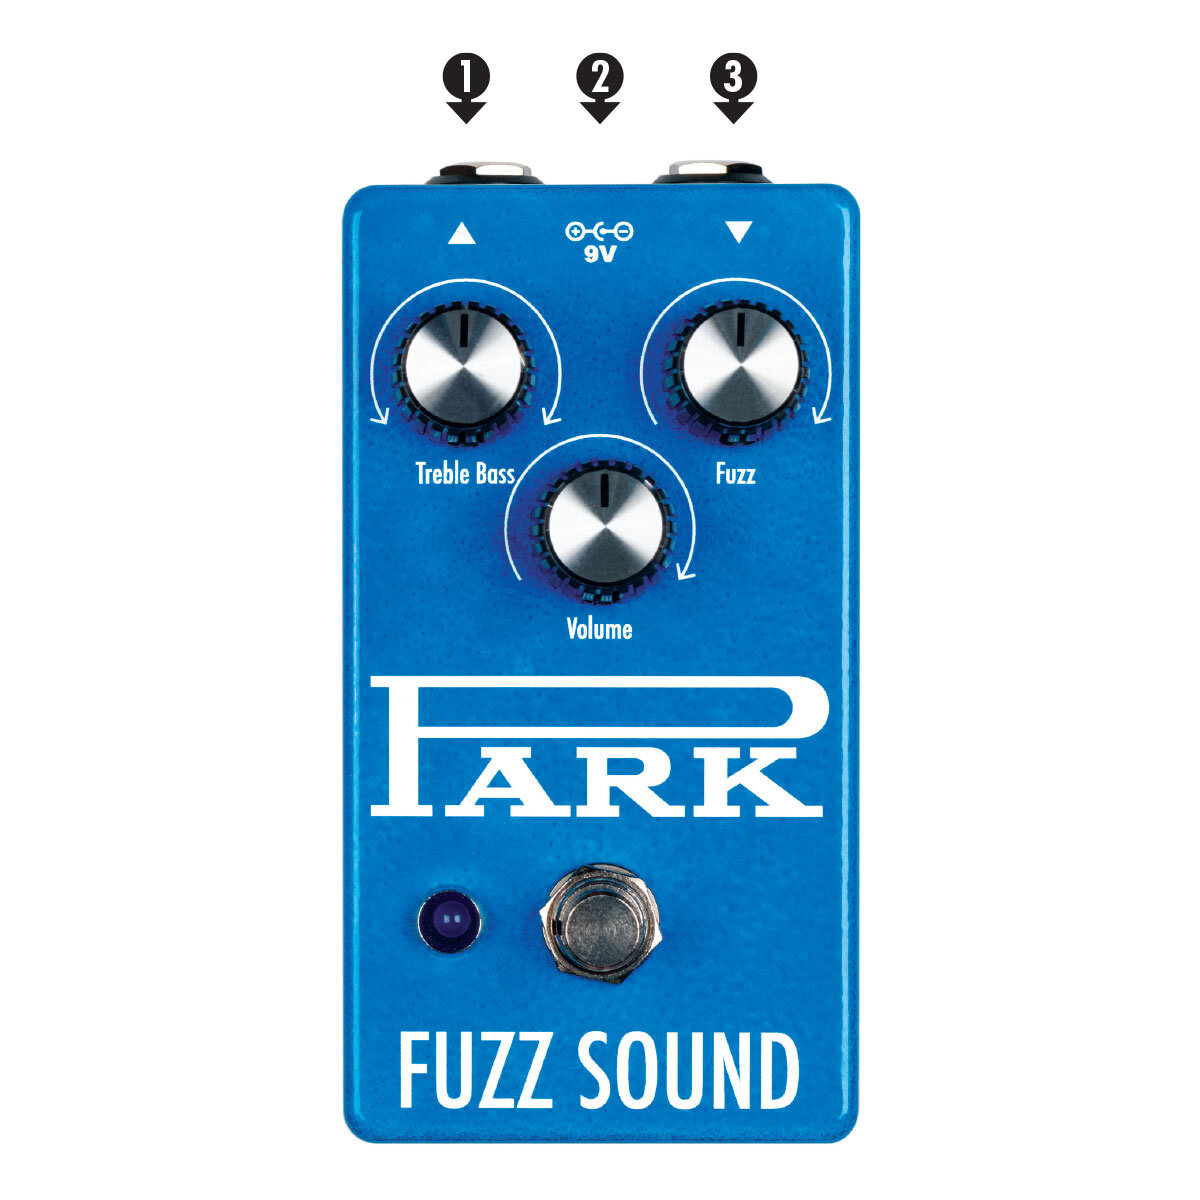 Park-Fuzz-Sound-Controls.jpg